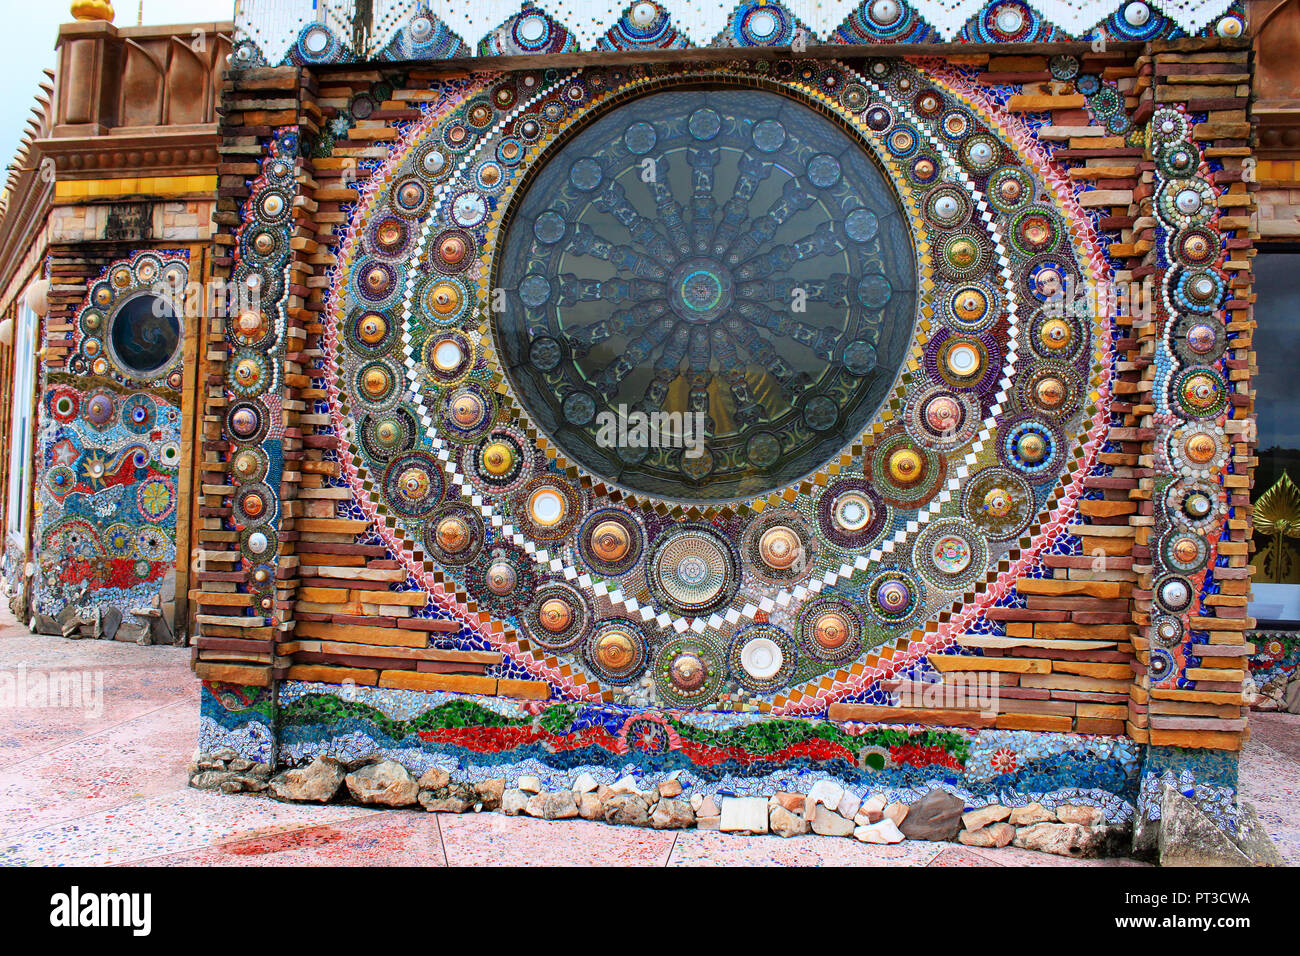 Beautiful Mandalas High Resolution Stock Photography And Images Alamy